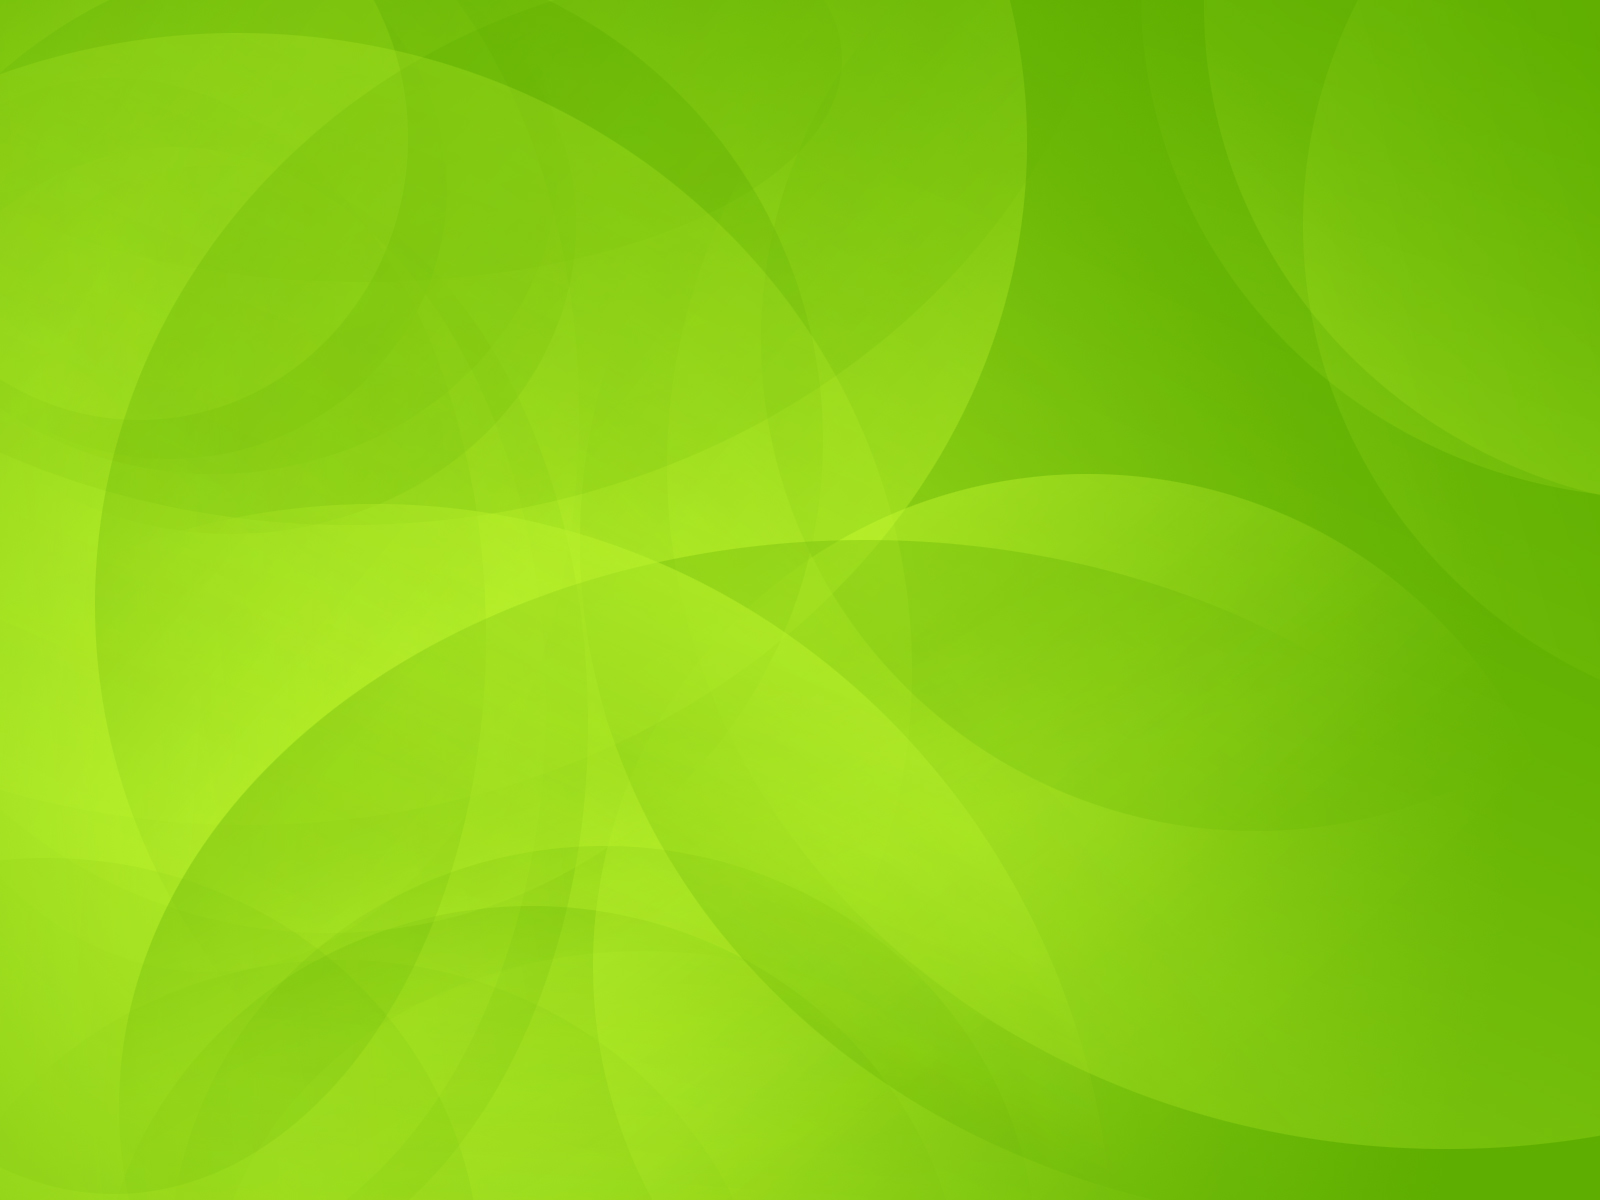 Image Ubuntu Green Pc Android iPhone And iPad Wallpaper